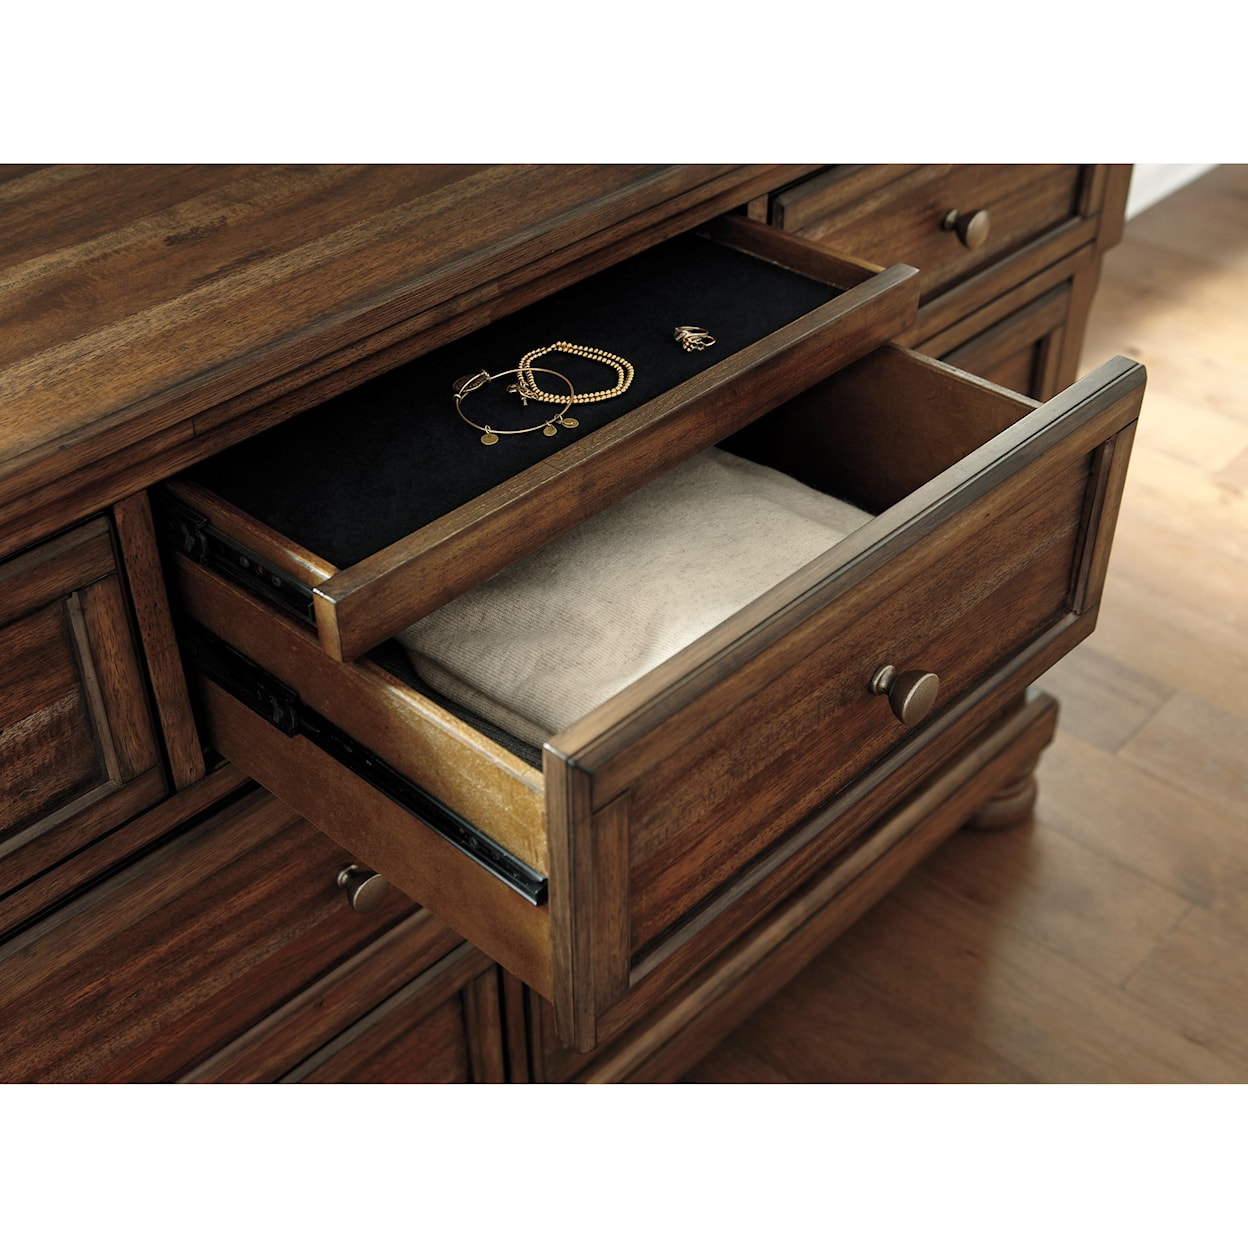 Ashley Furniture Signature Design Flynnter Dresser & Bedroom Mirror